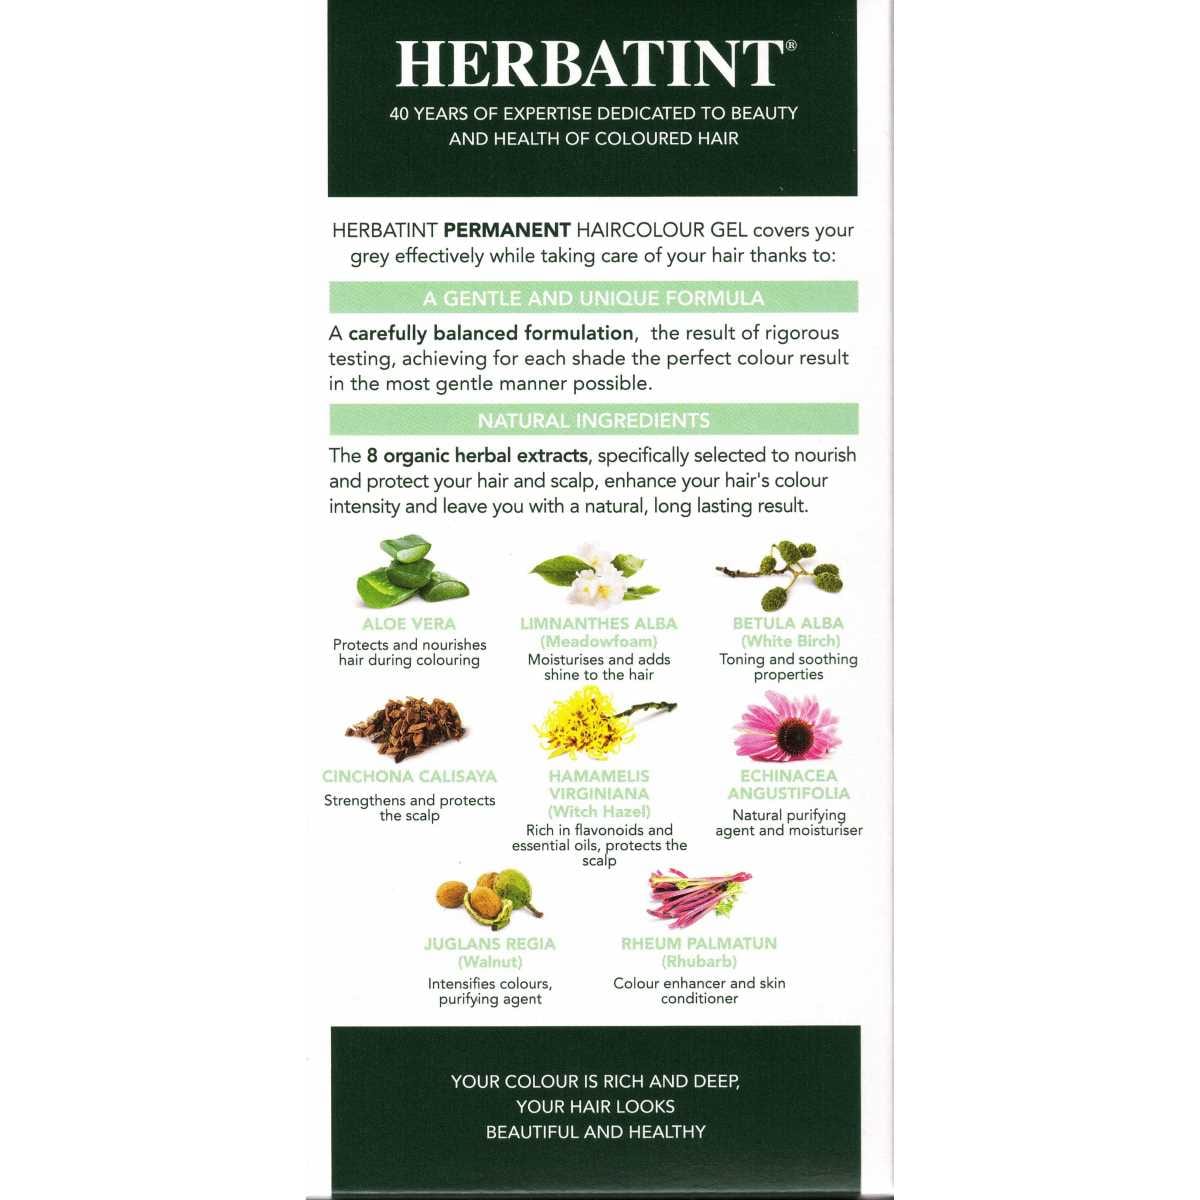 Herbatint Permanent Hair Colour Gel 4C Ash Chestnut 150ml